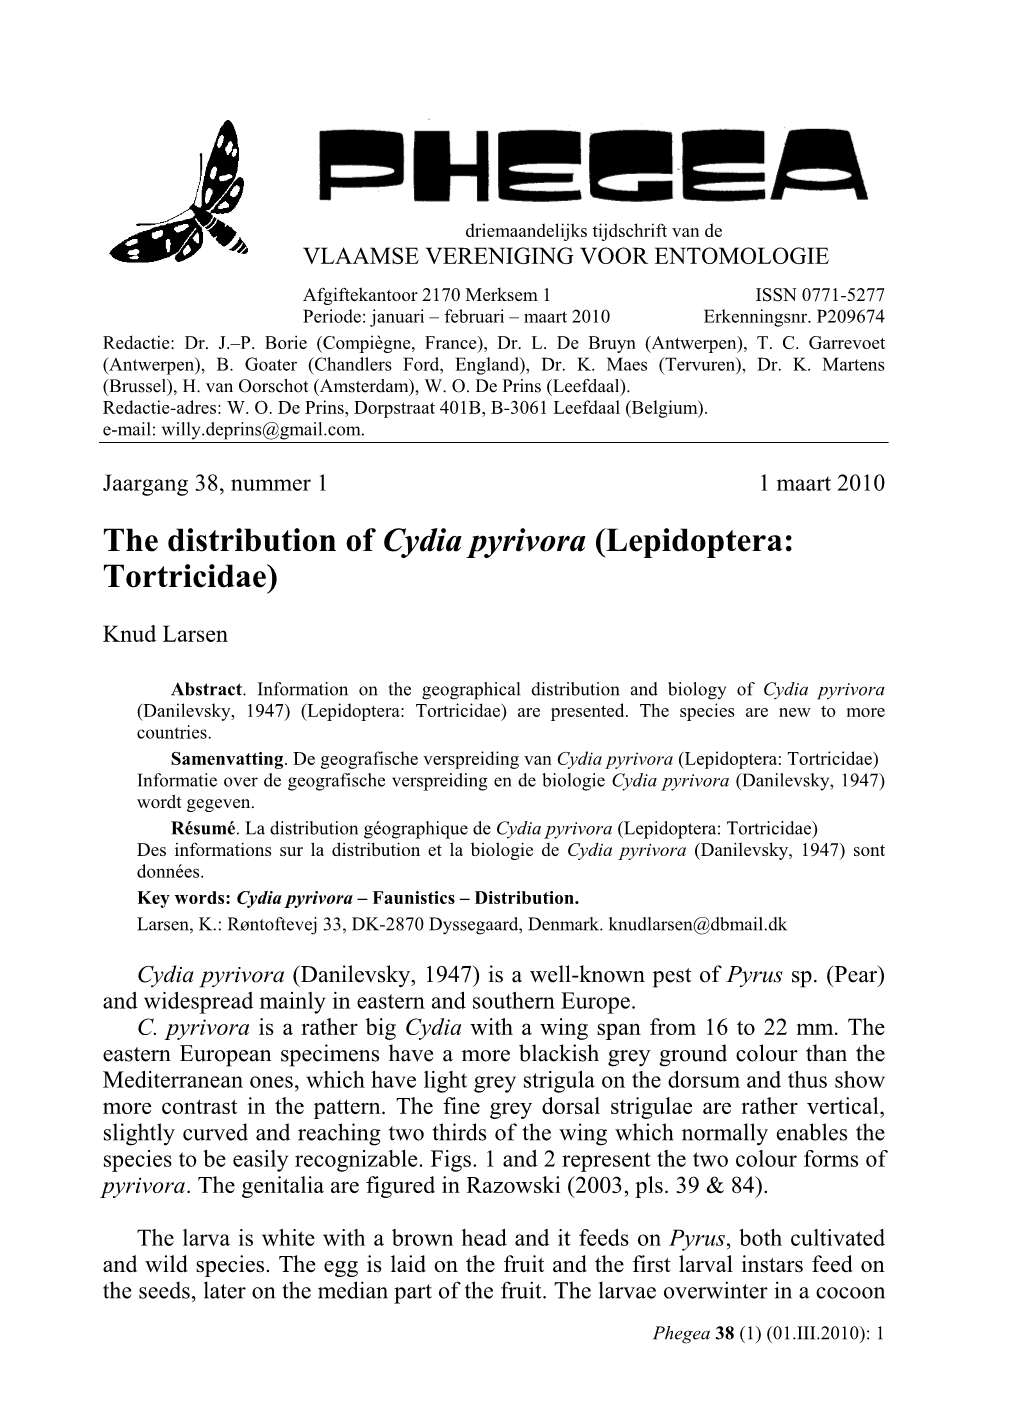 The Distribution of Cydia Pyrivora (Lepidoptera: Tortricidae)